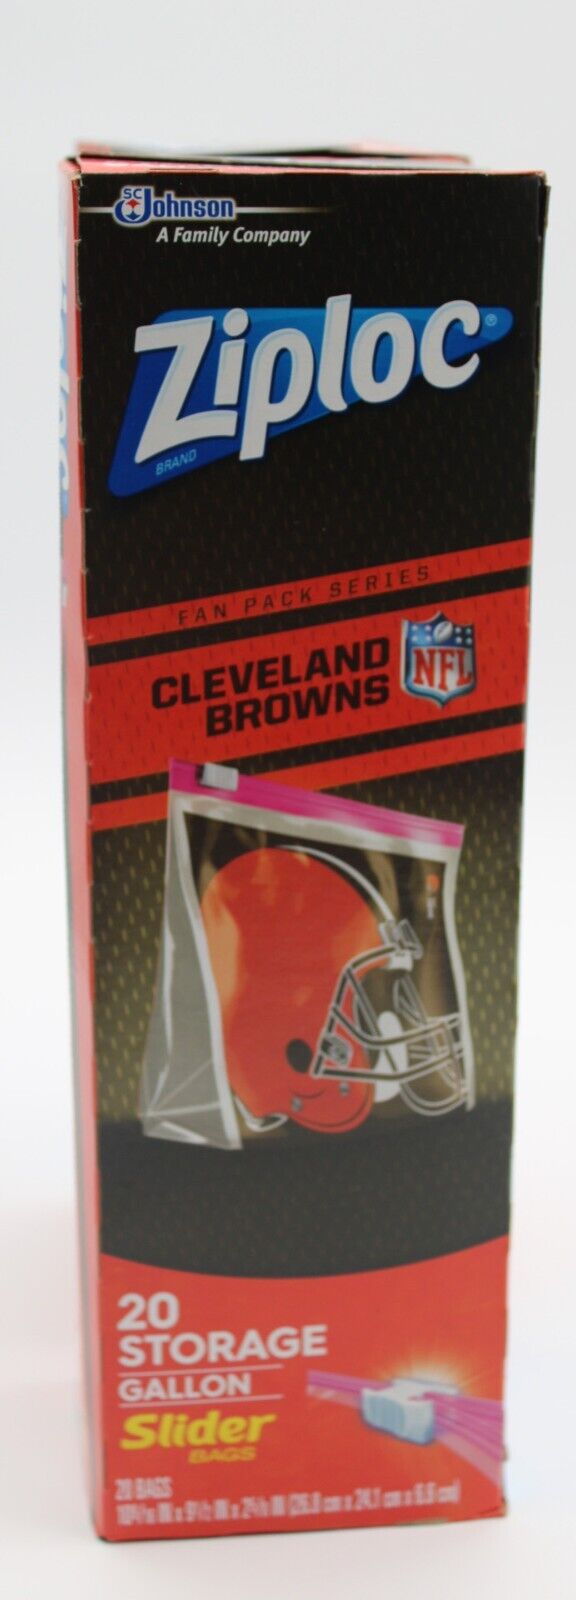 Ziploc Dawg Pound NFL Cleveland Browns 20 Storage Gallon Slider Bags 4 Pack